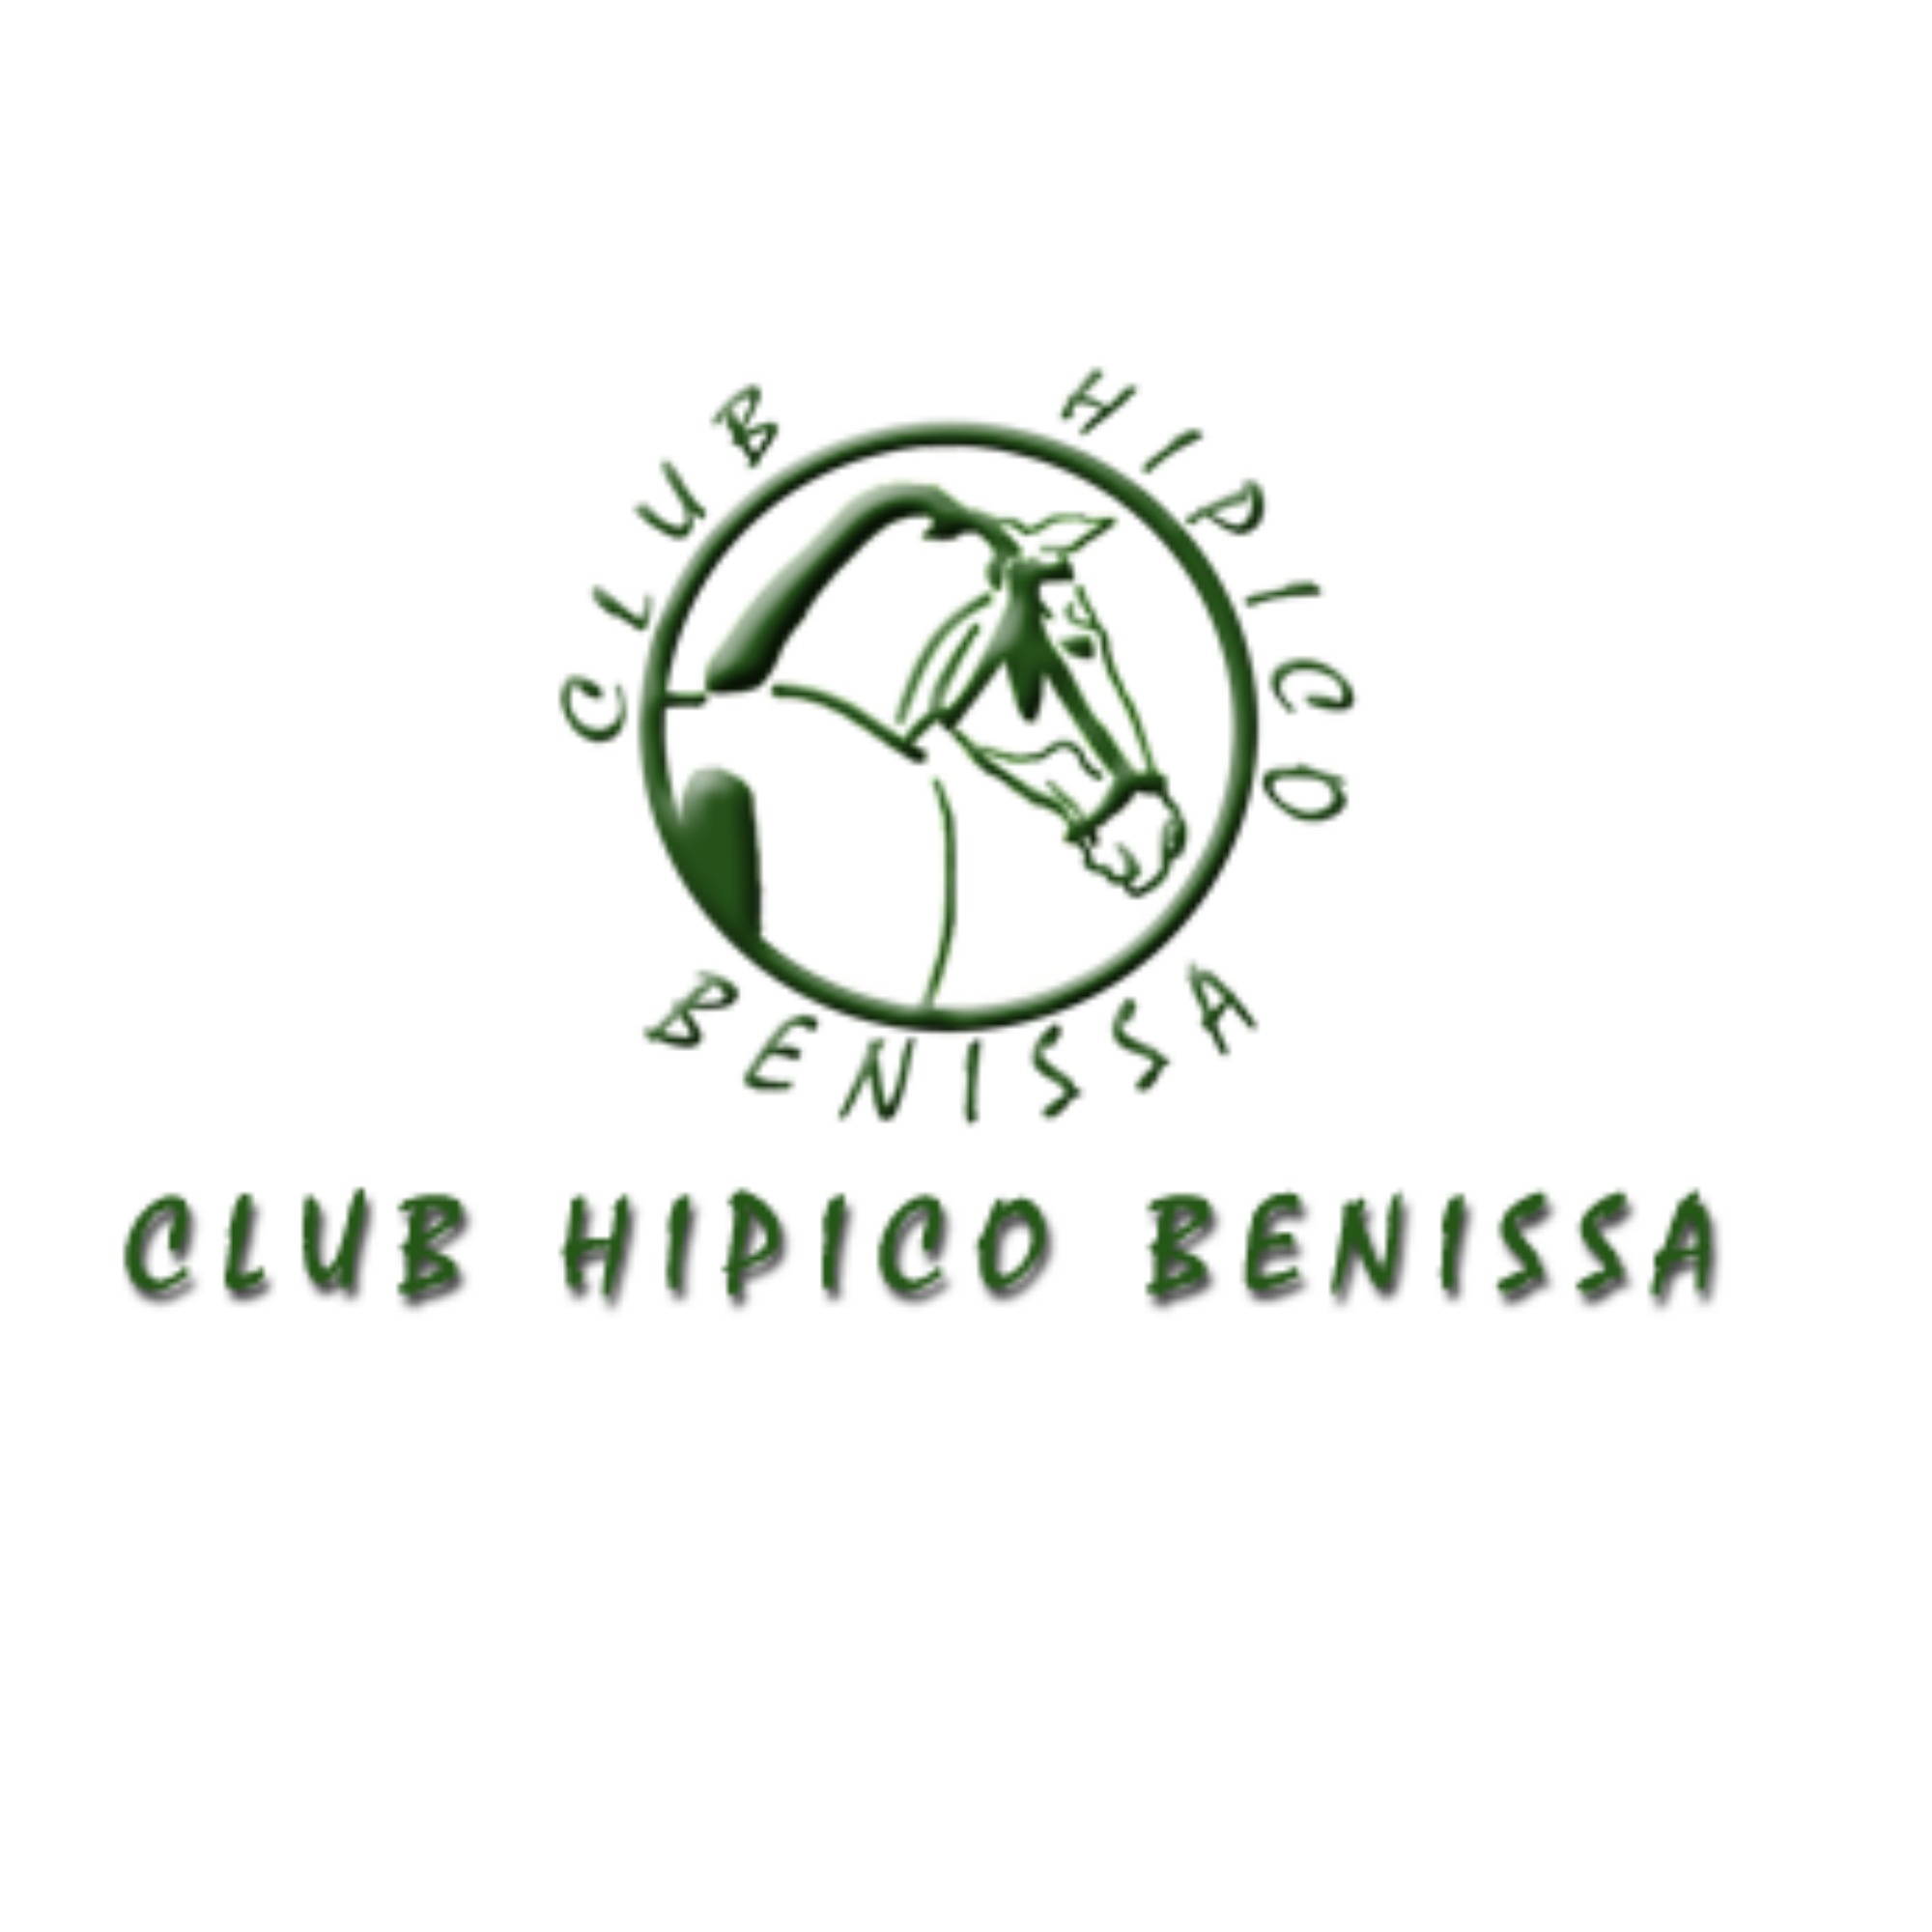 Club Hípic Benissa